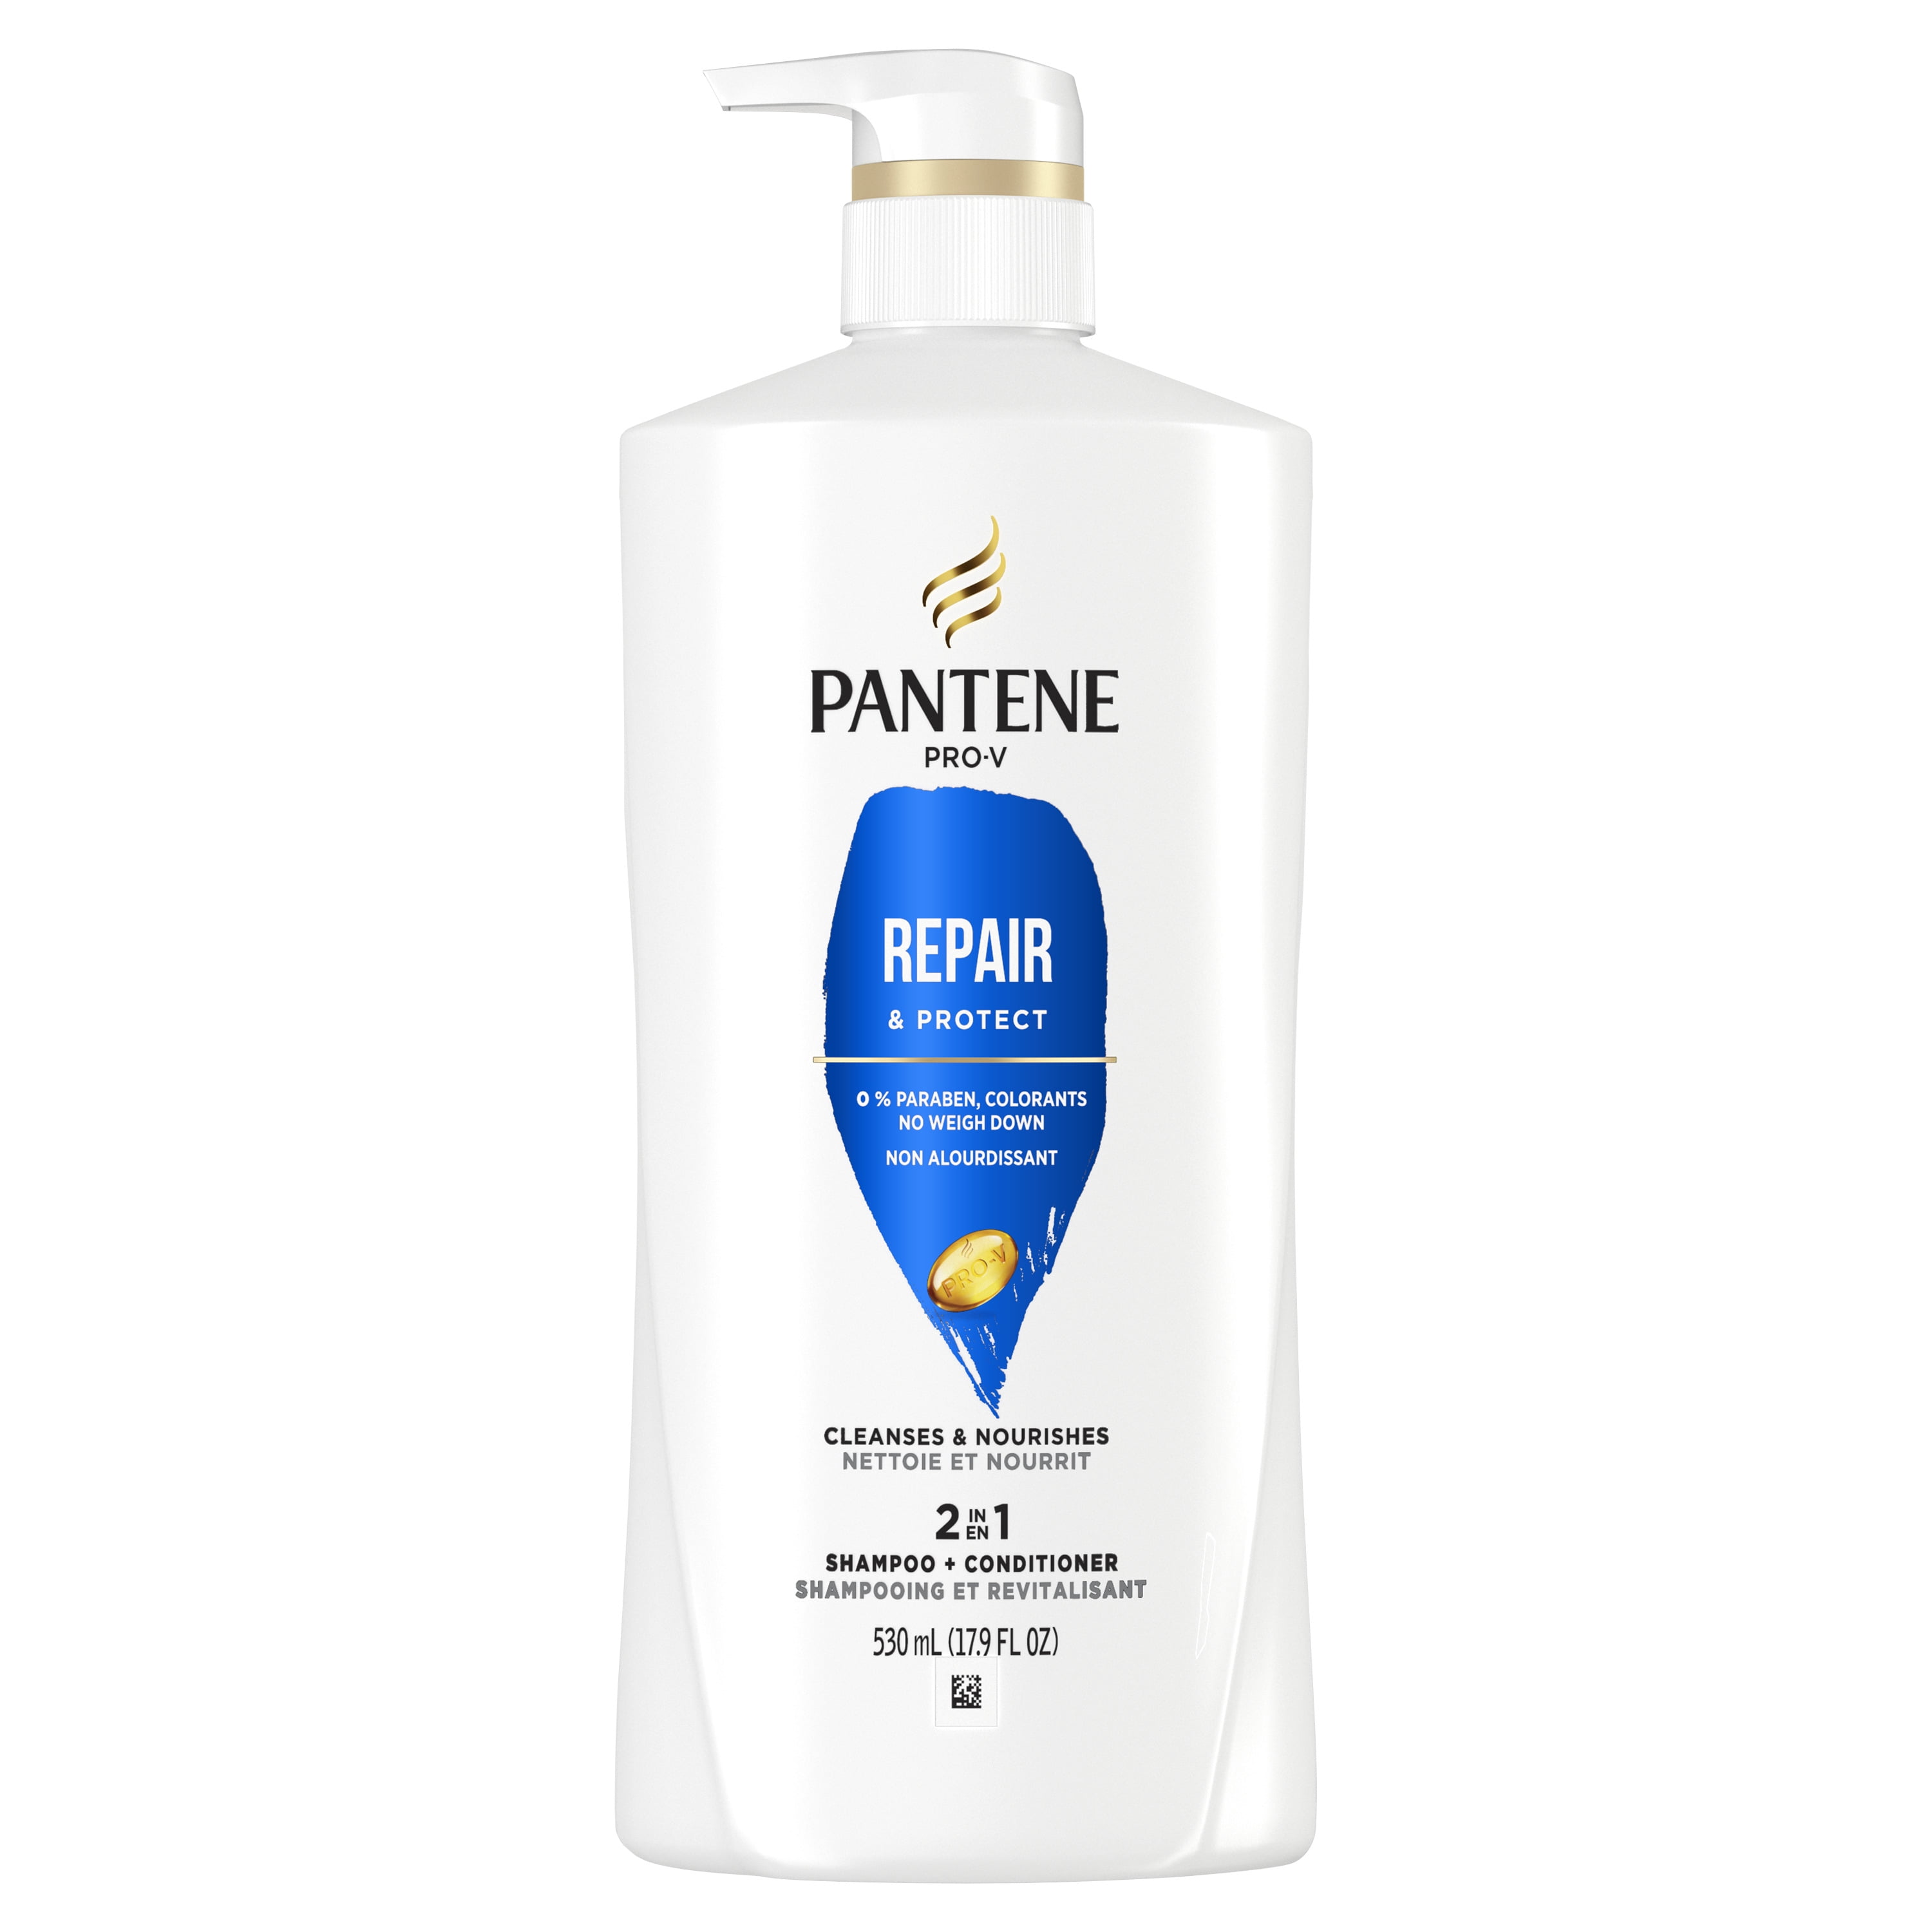 Pantene Pro-V Repair & Protect 2in1 Shampoo + Conditioner,17.9 - Walmart.com